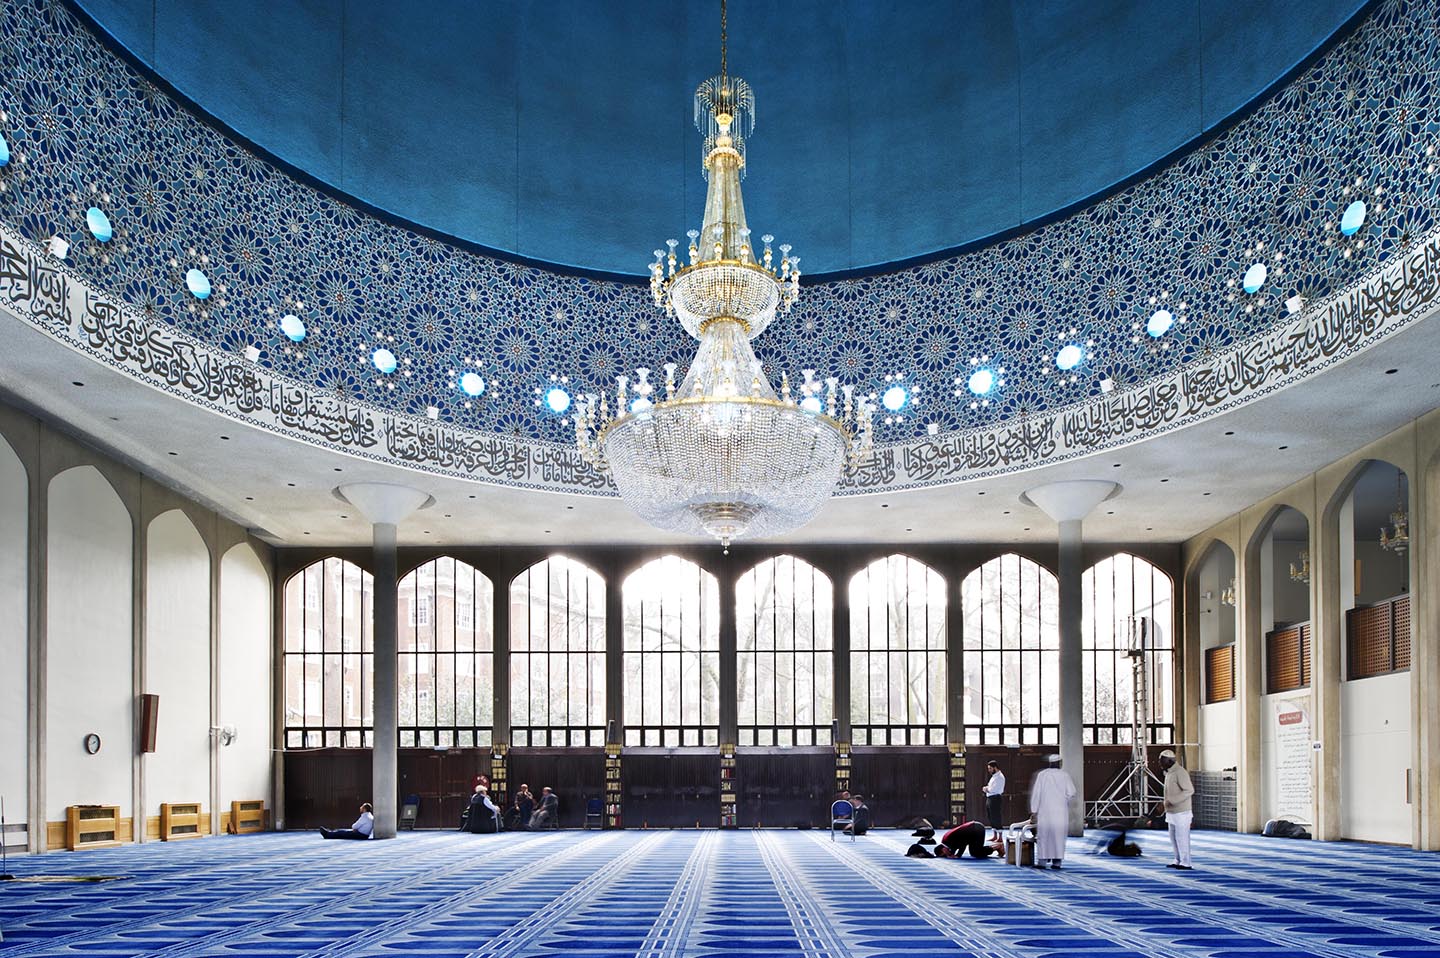 London Central Mosque, prayer hall interior